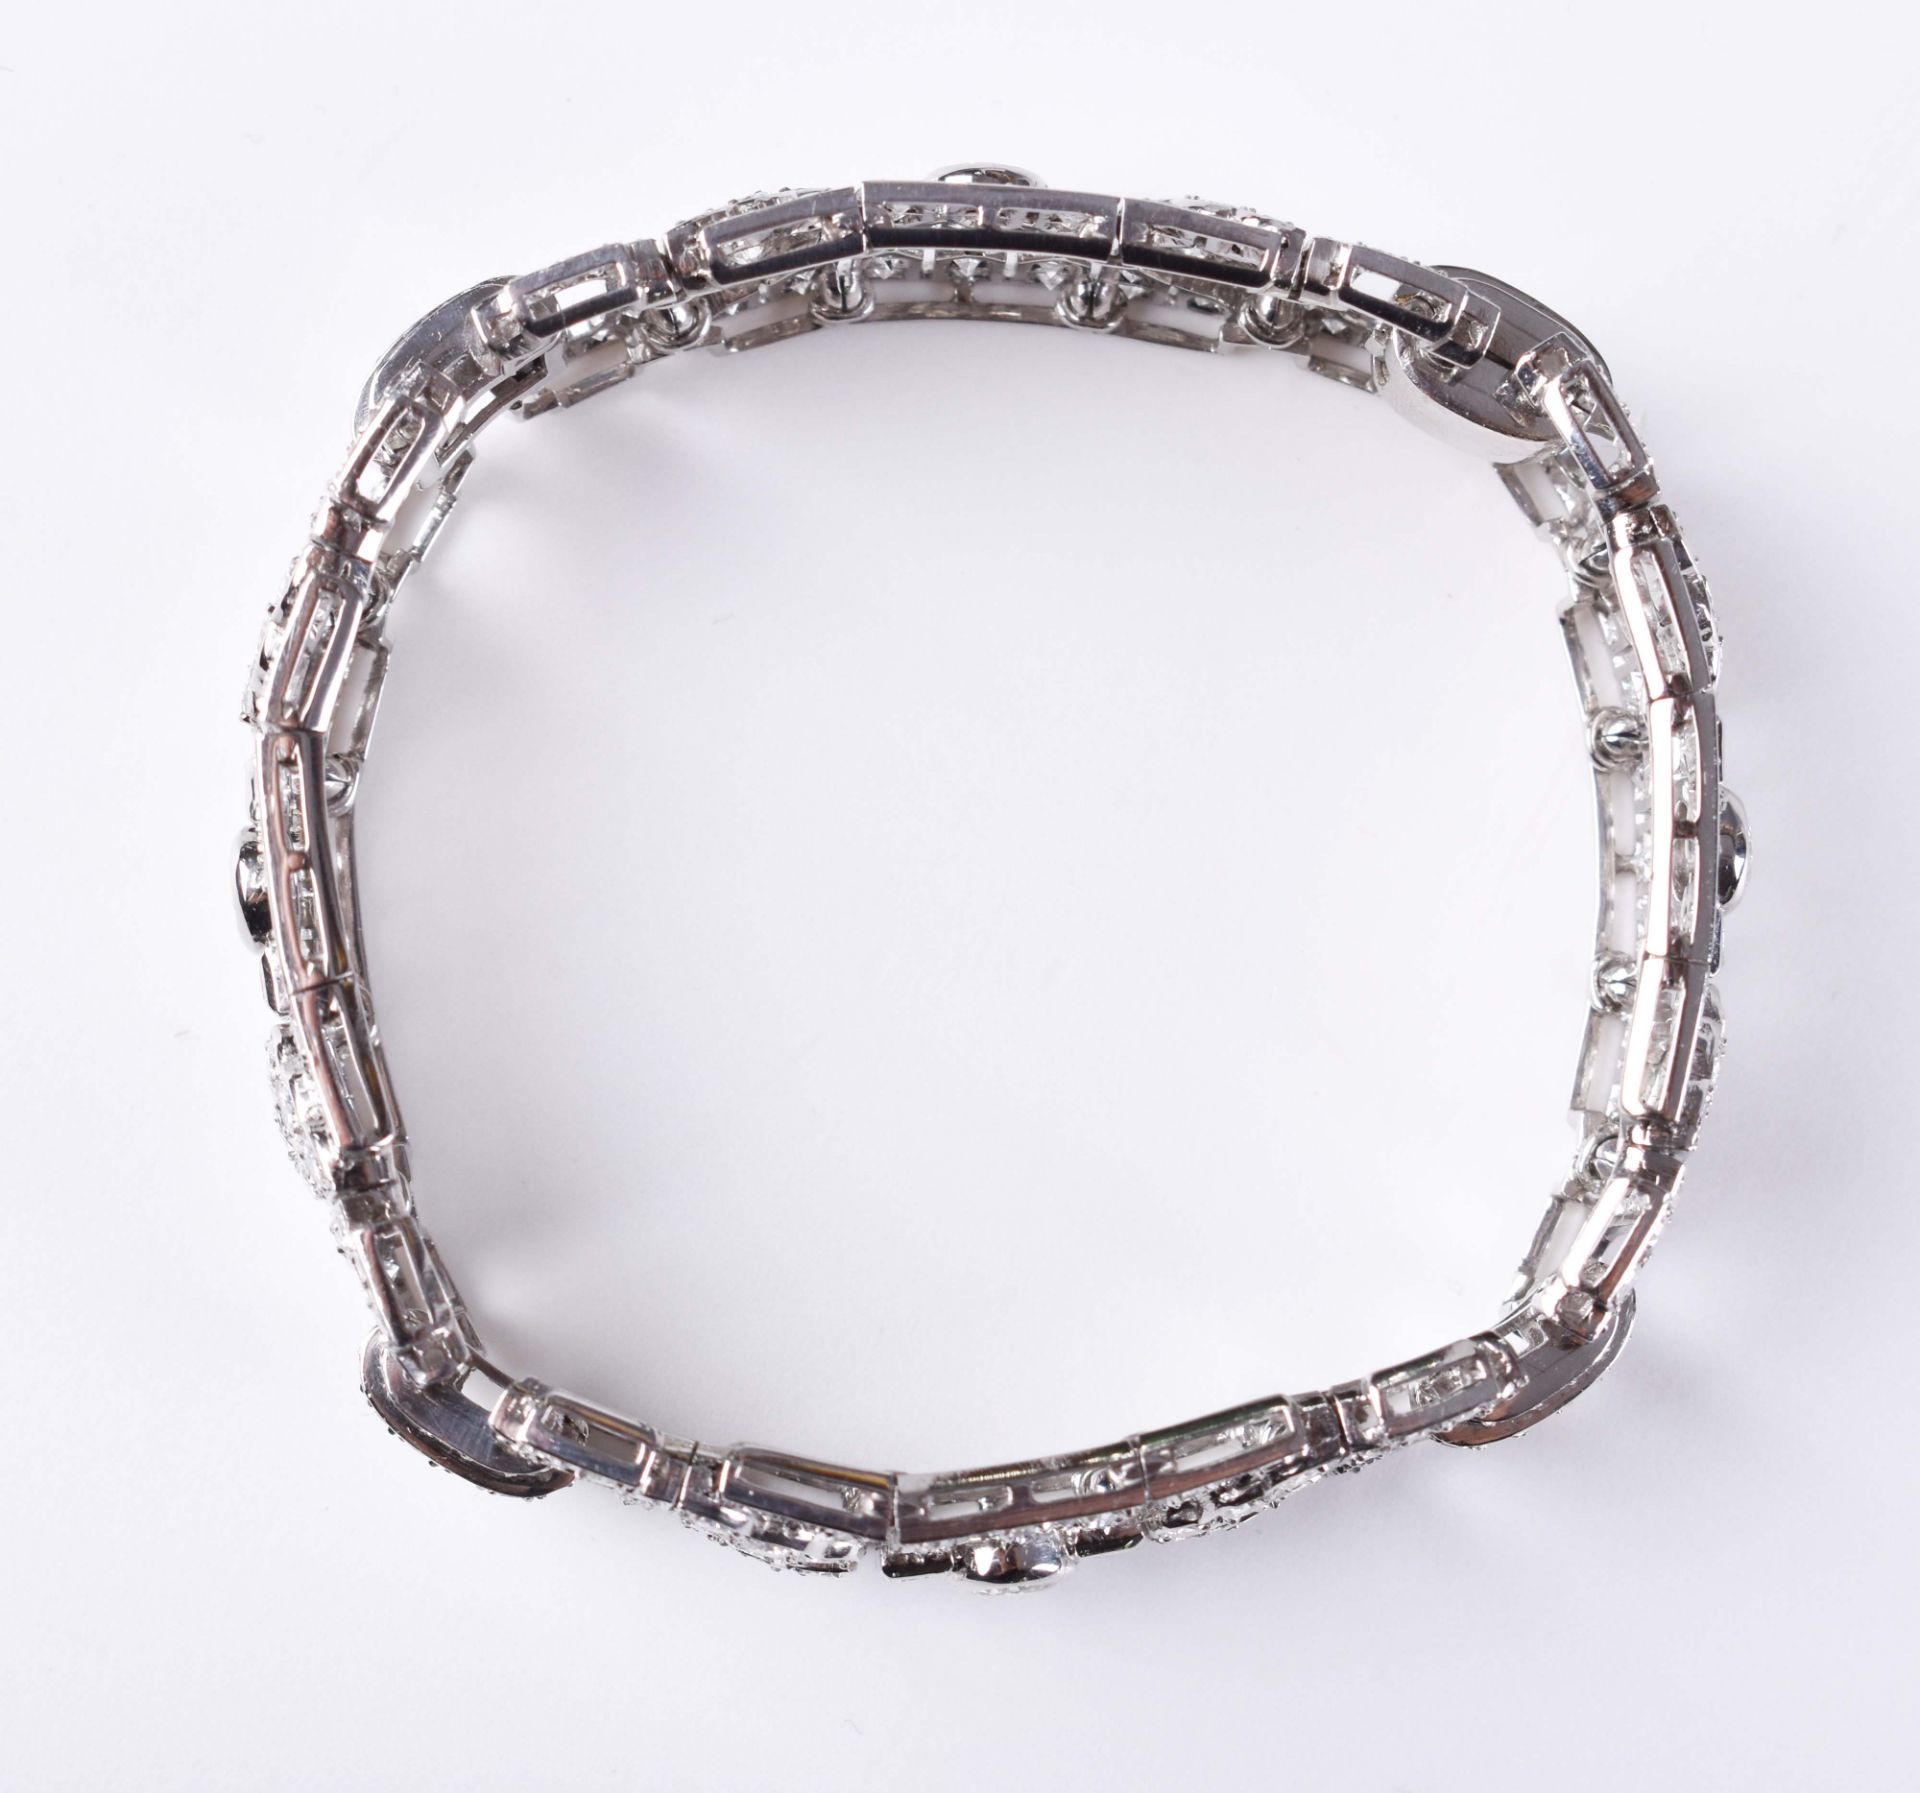  Art Deco diamond bracelet - Image 3 of 6